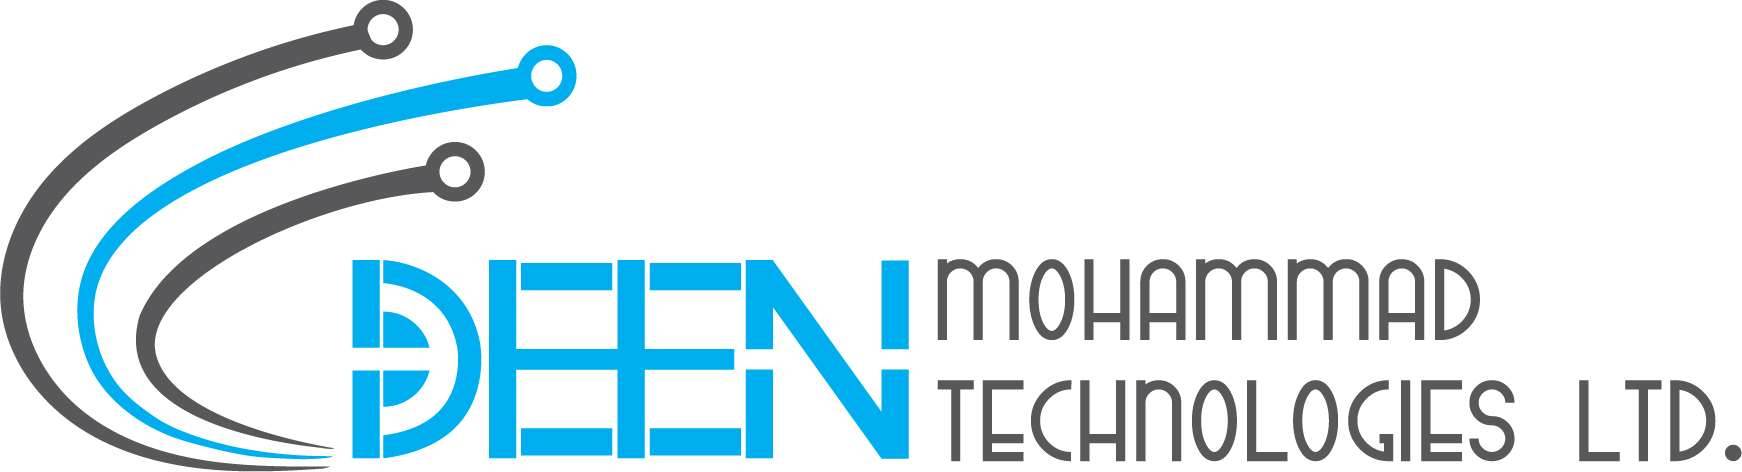 Deem Mohammad Technologies Ltd. Logo